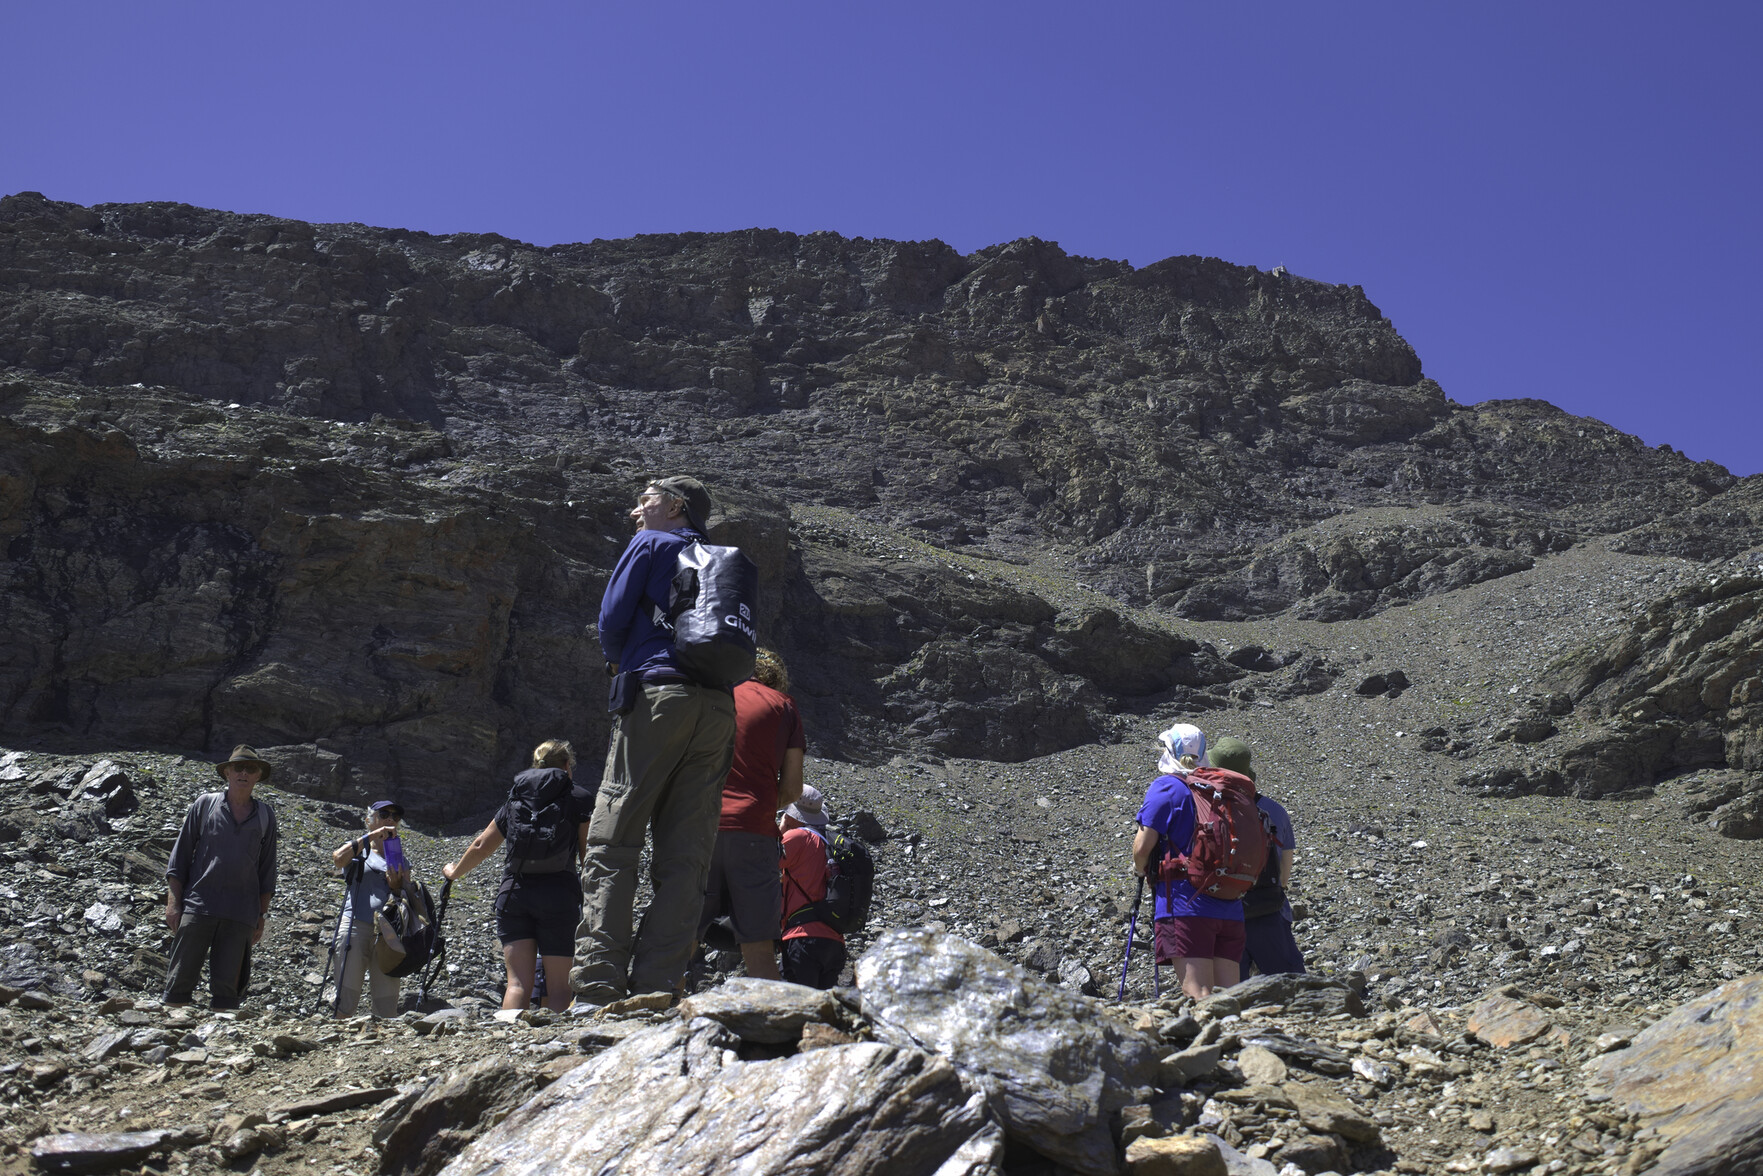 Hikers gathered below the summit slopes of Veleta